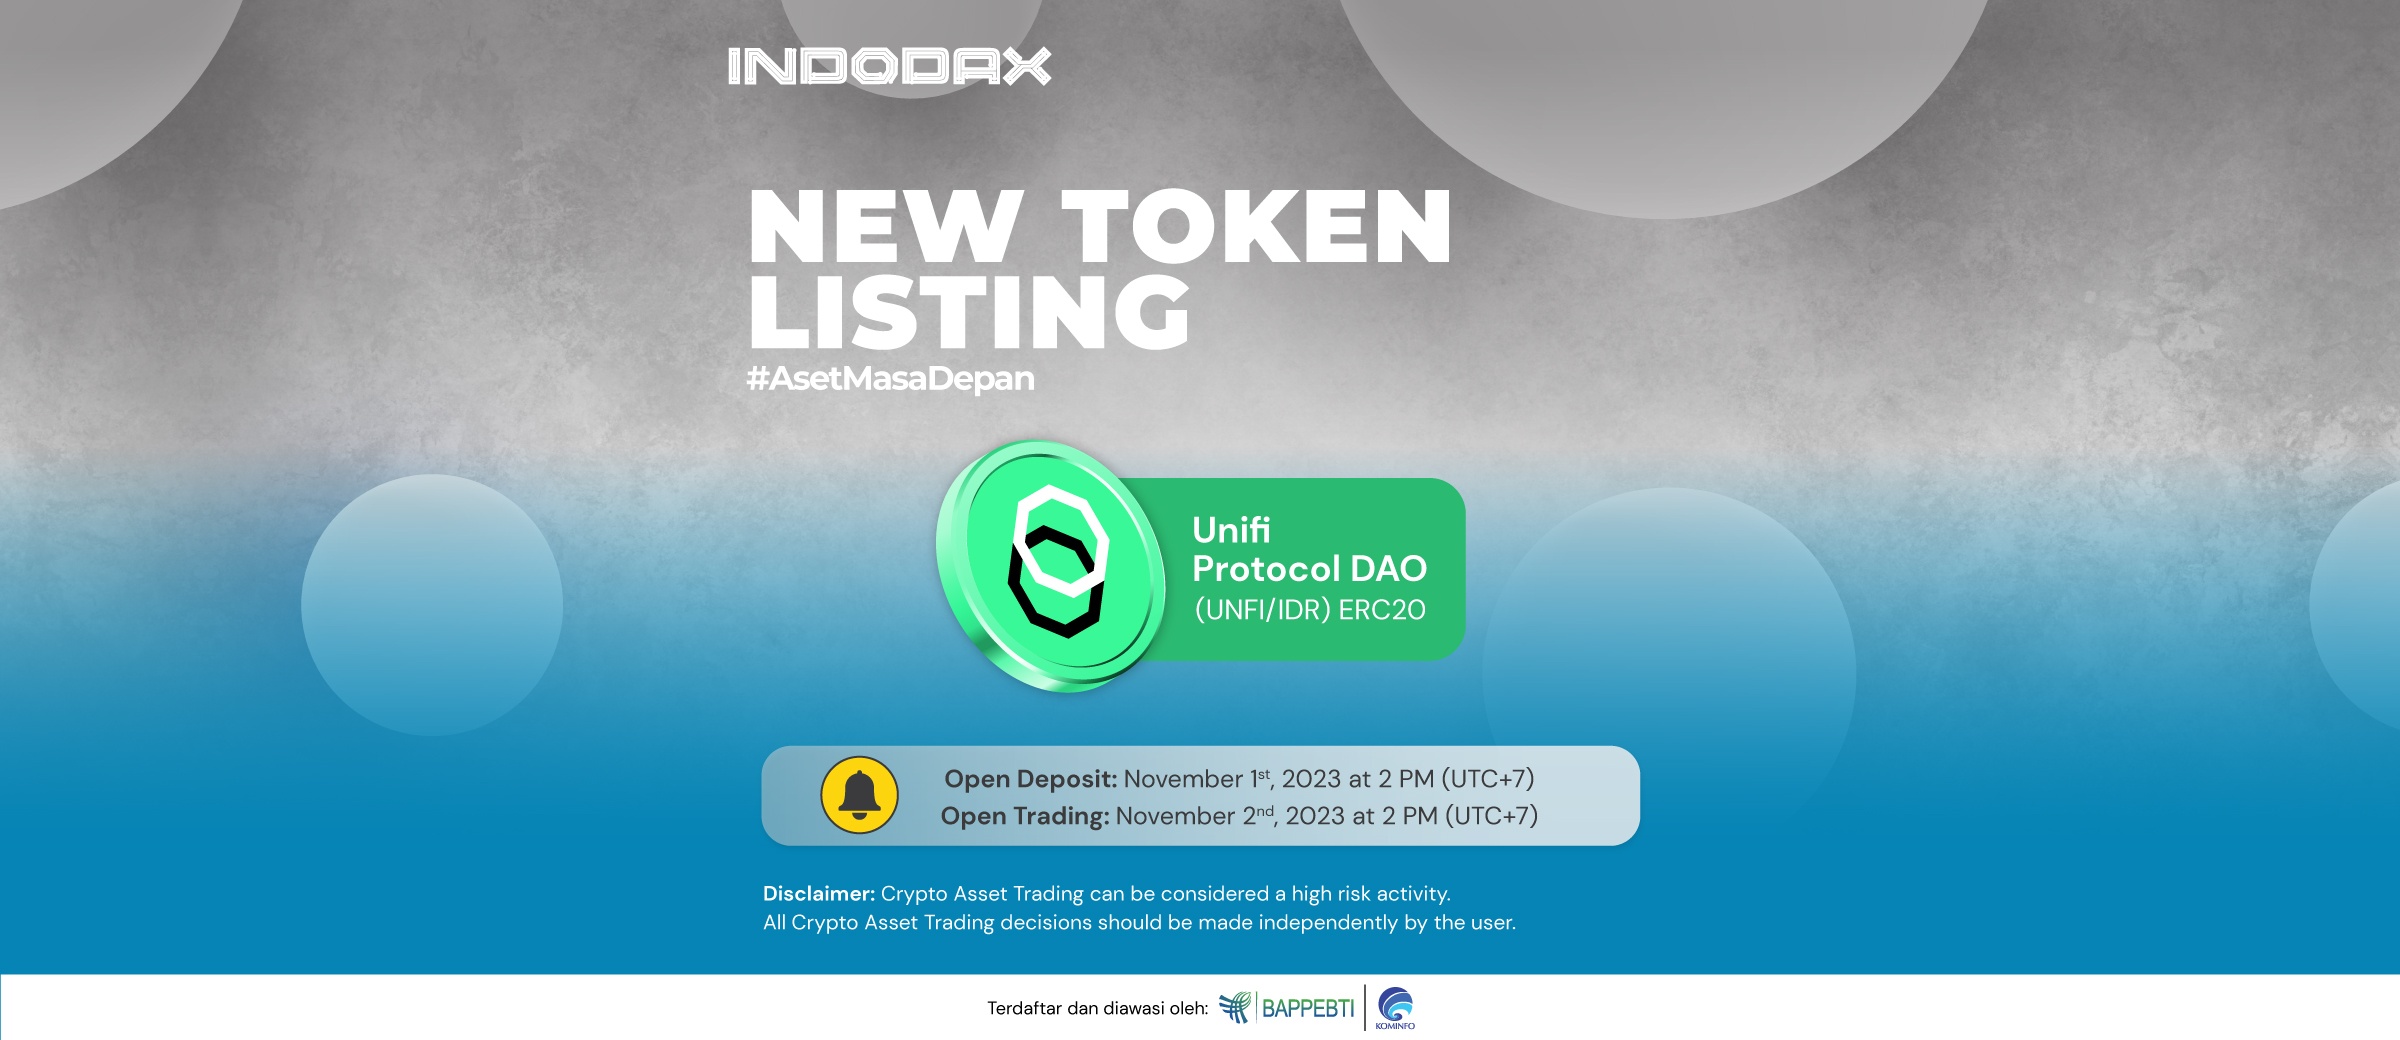 Lagi Kripto Baru Listing di Indodax, Kali Ini UNFI Listing di INDODAX